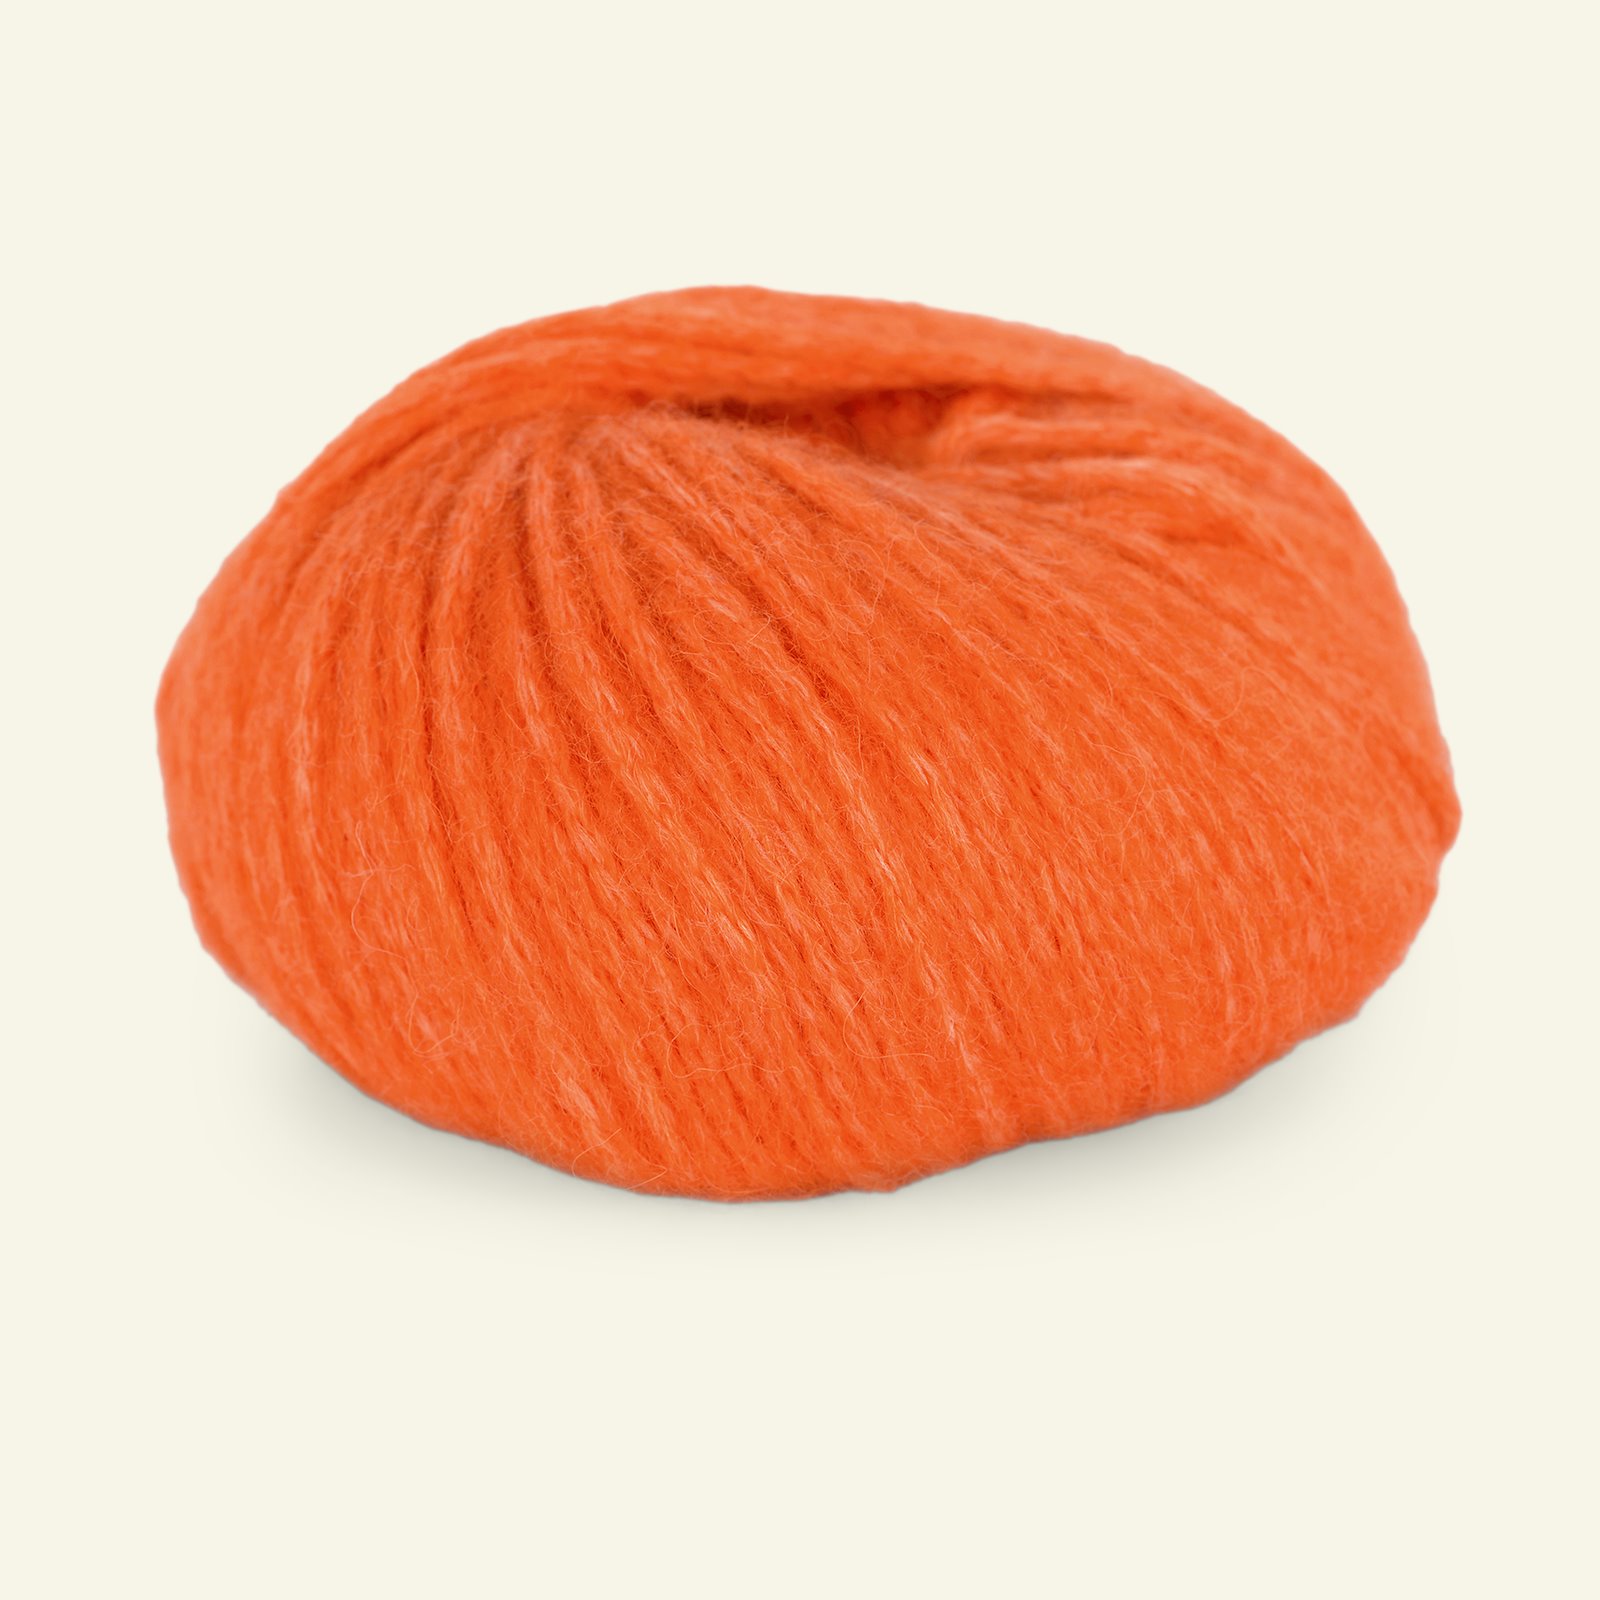 Du Store Alpakka, alpaca mixed yarn "Pus", orange (4059) 90000739_pack_b